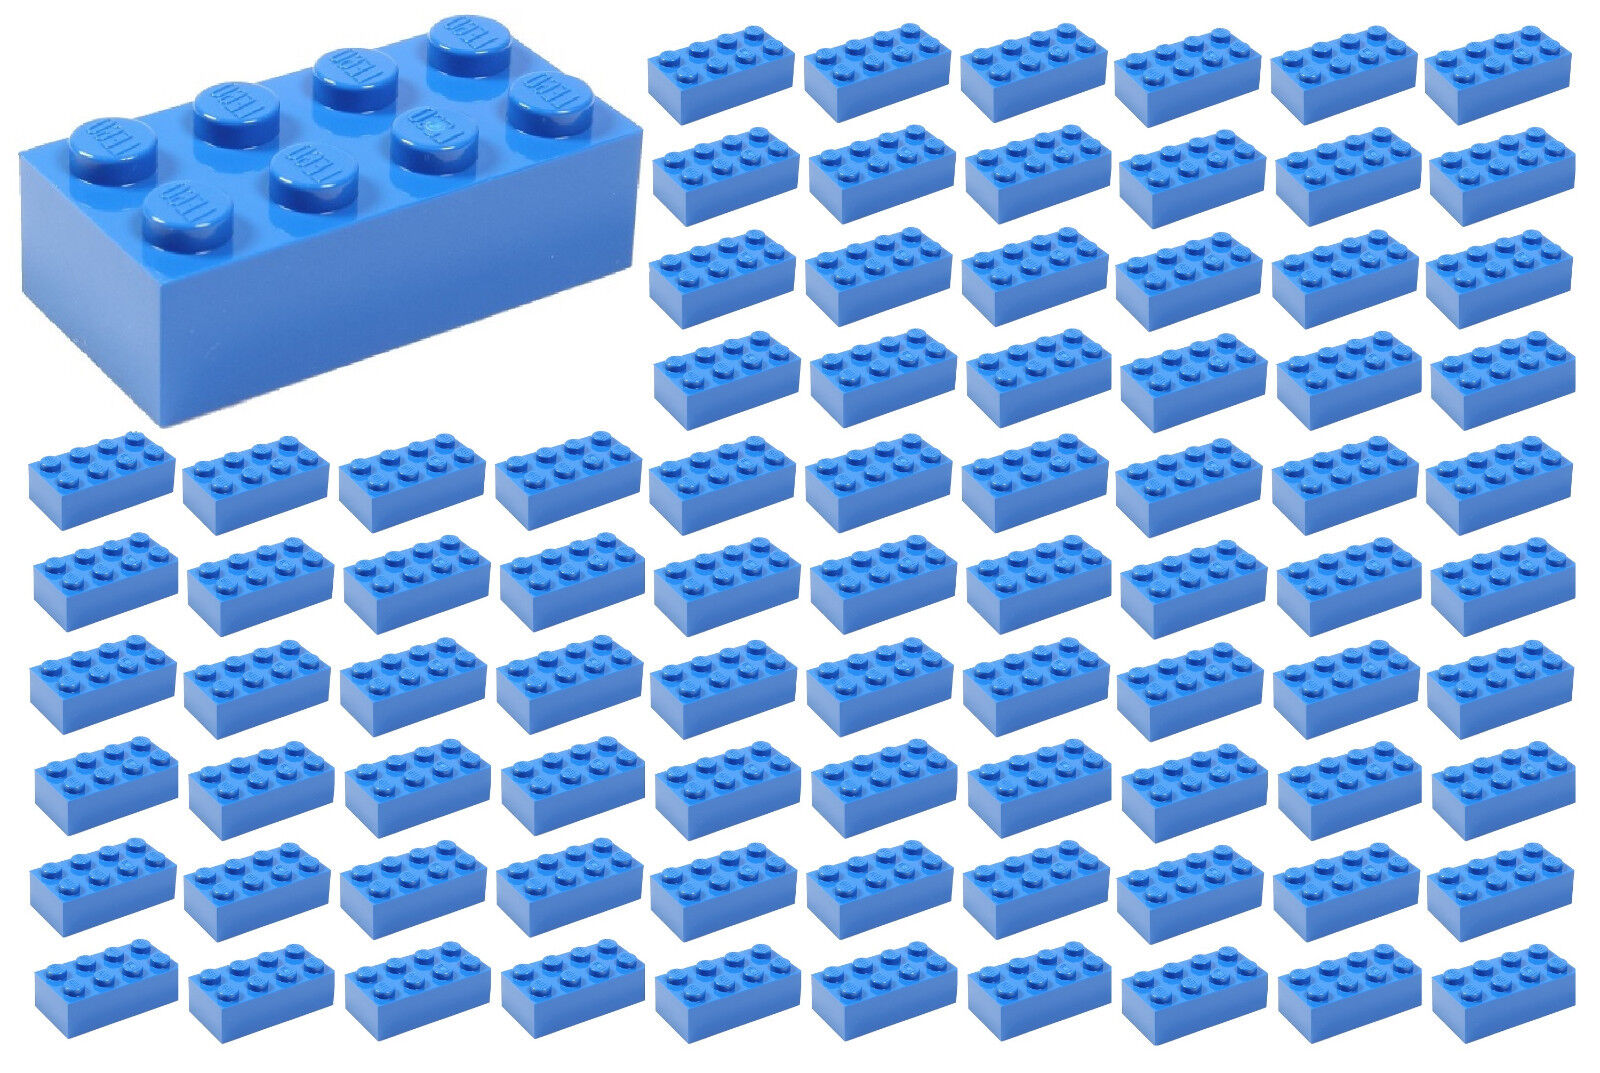 ☀️100 NEW LEGO 2x4 BLUE Bricks (ID 3001) BULK Parts star wars city Sky Ocean